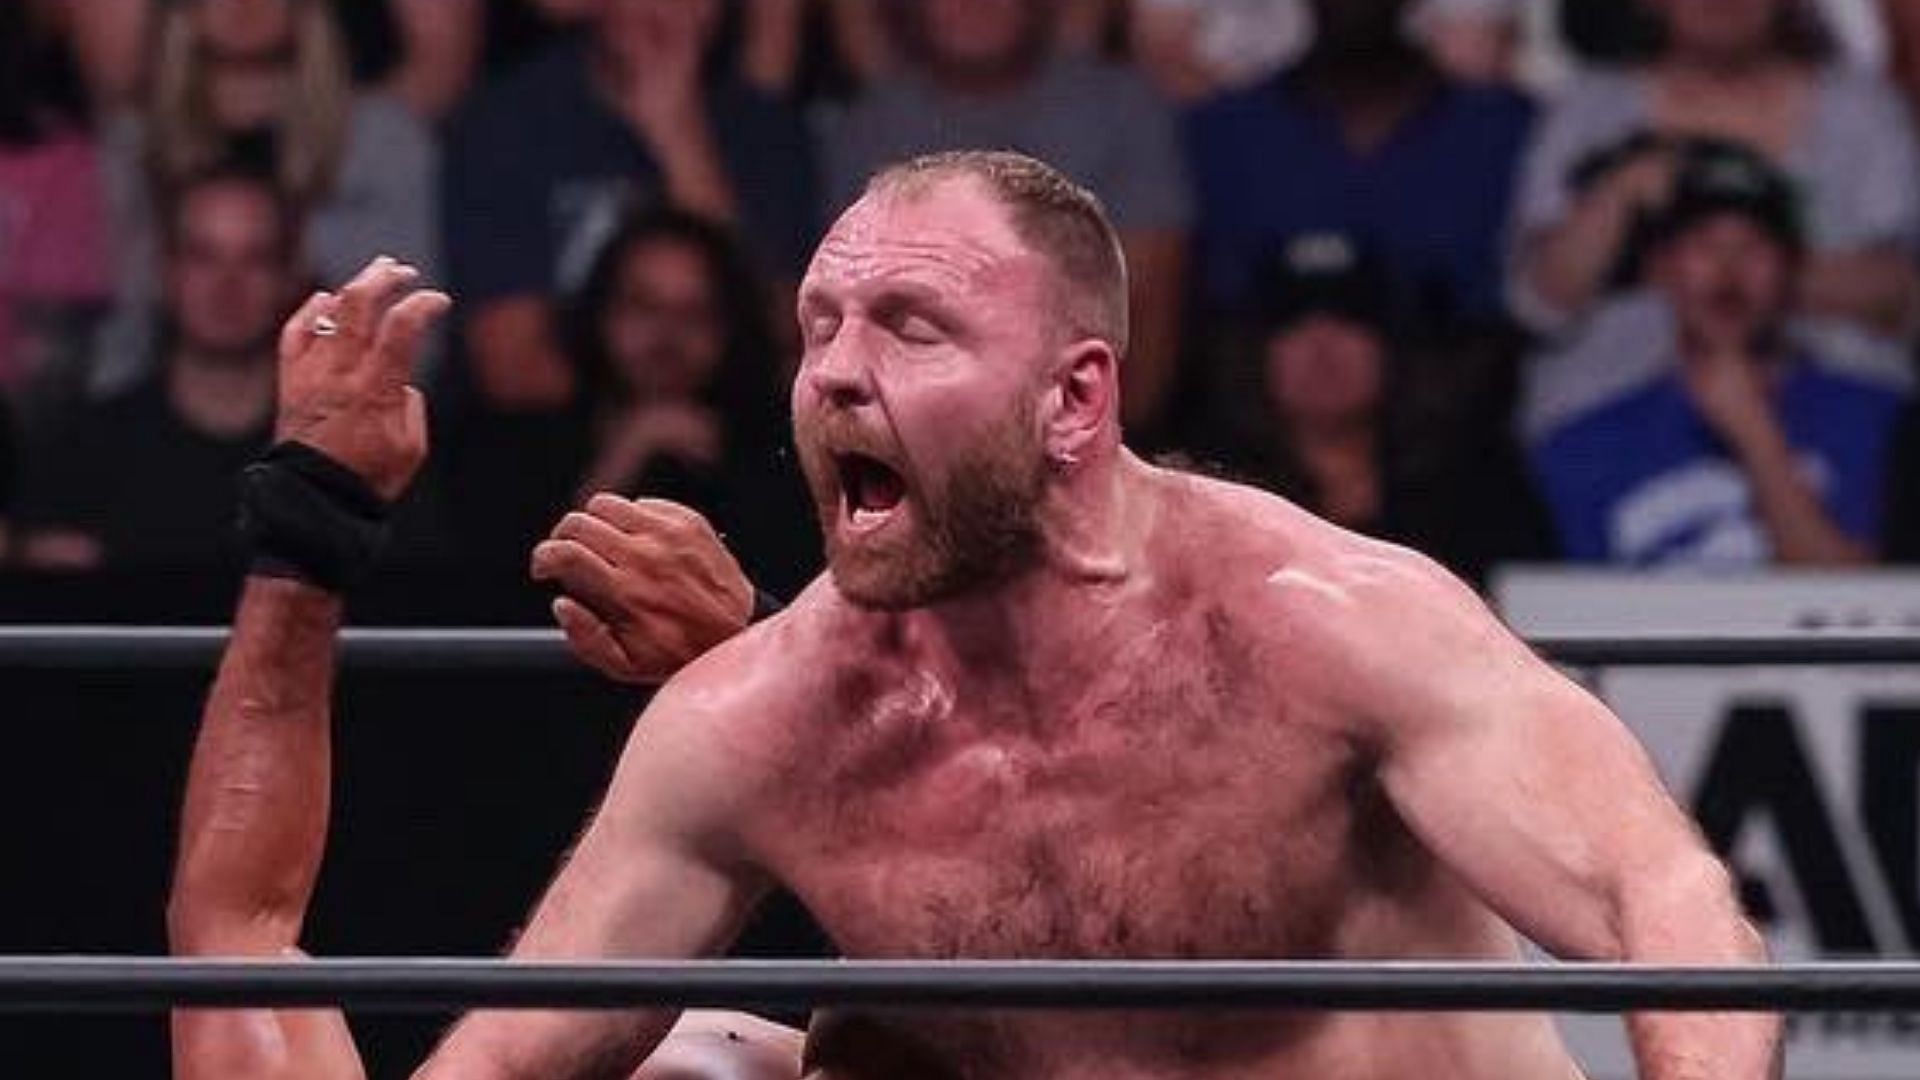 Jon Moxley defends his AEW International Championship tonight on Dynamite.